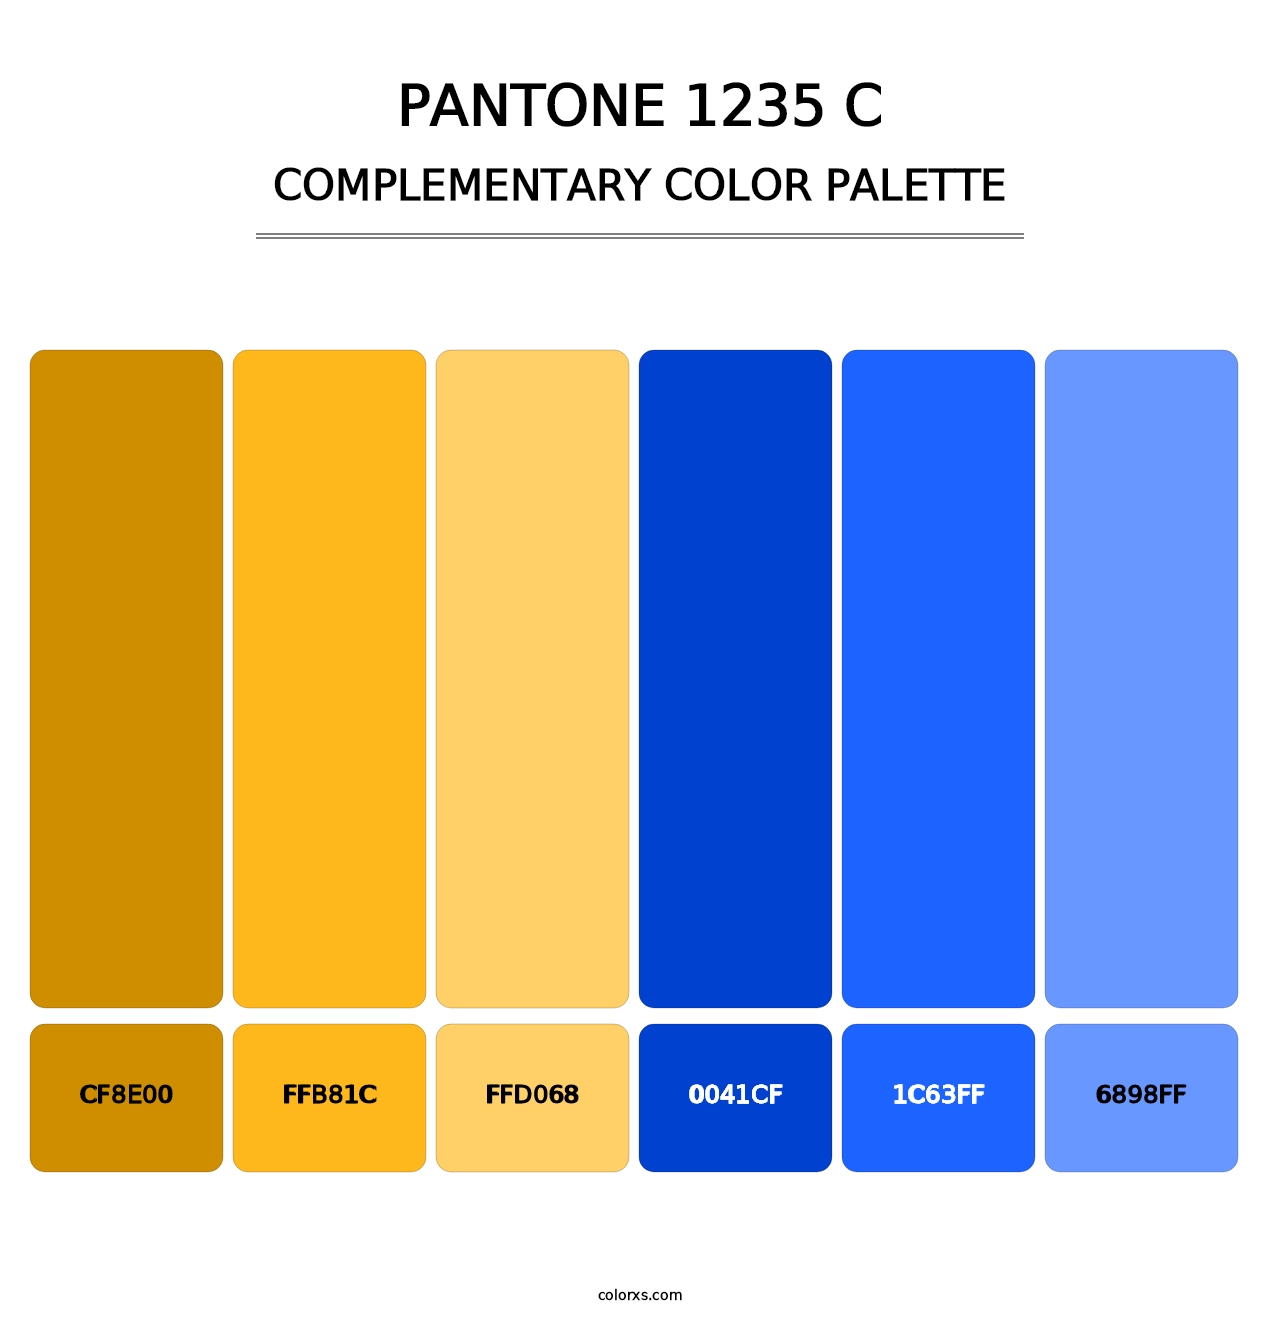 PANTONE 1235 C - Complementary Color Palette